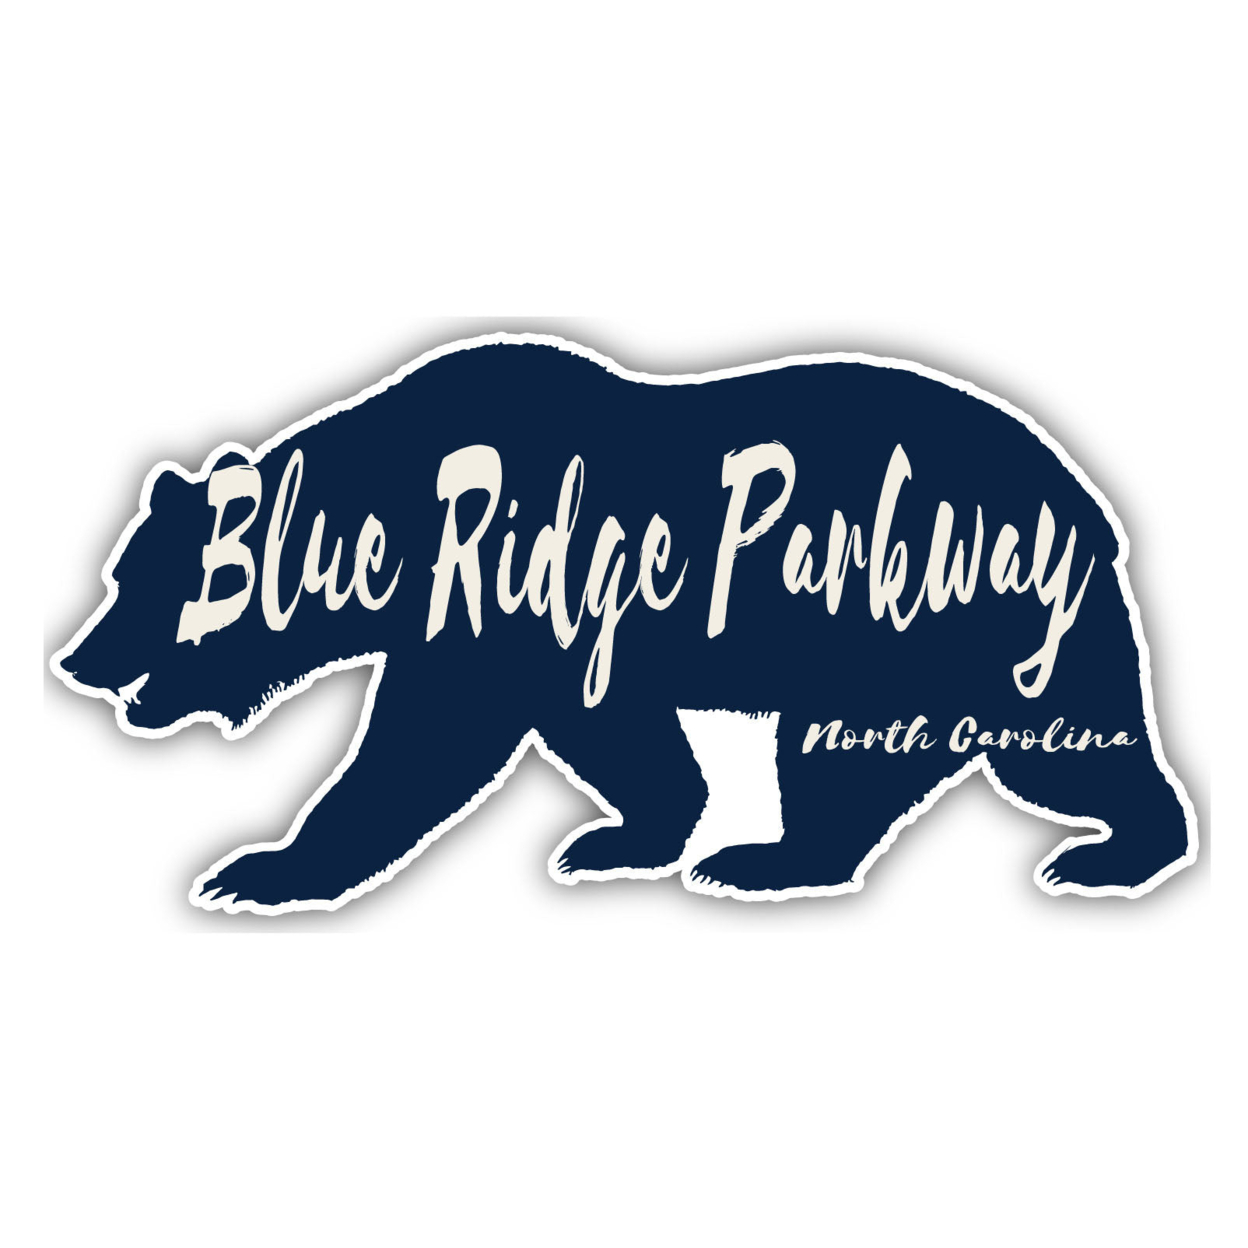 Blue Ridge Parkway North Carolina Souvenir Decorative Stickers (Choose Theme And Size) - 4-Pack, 12-Inch, Bear